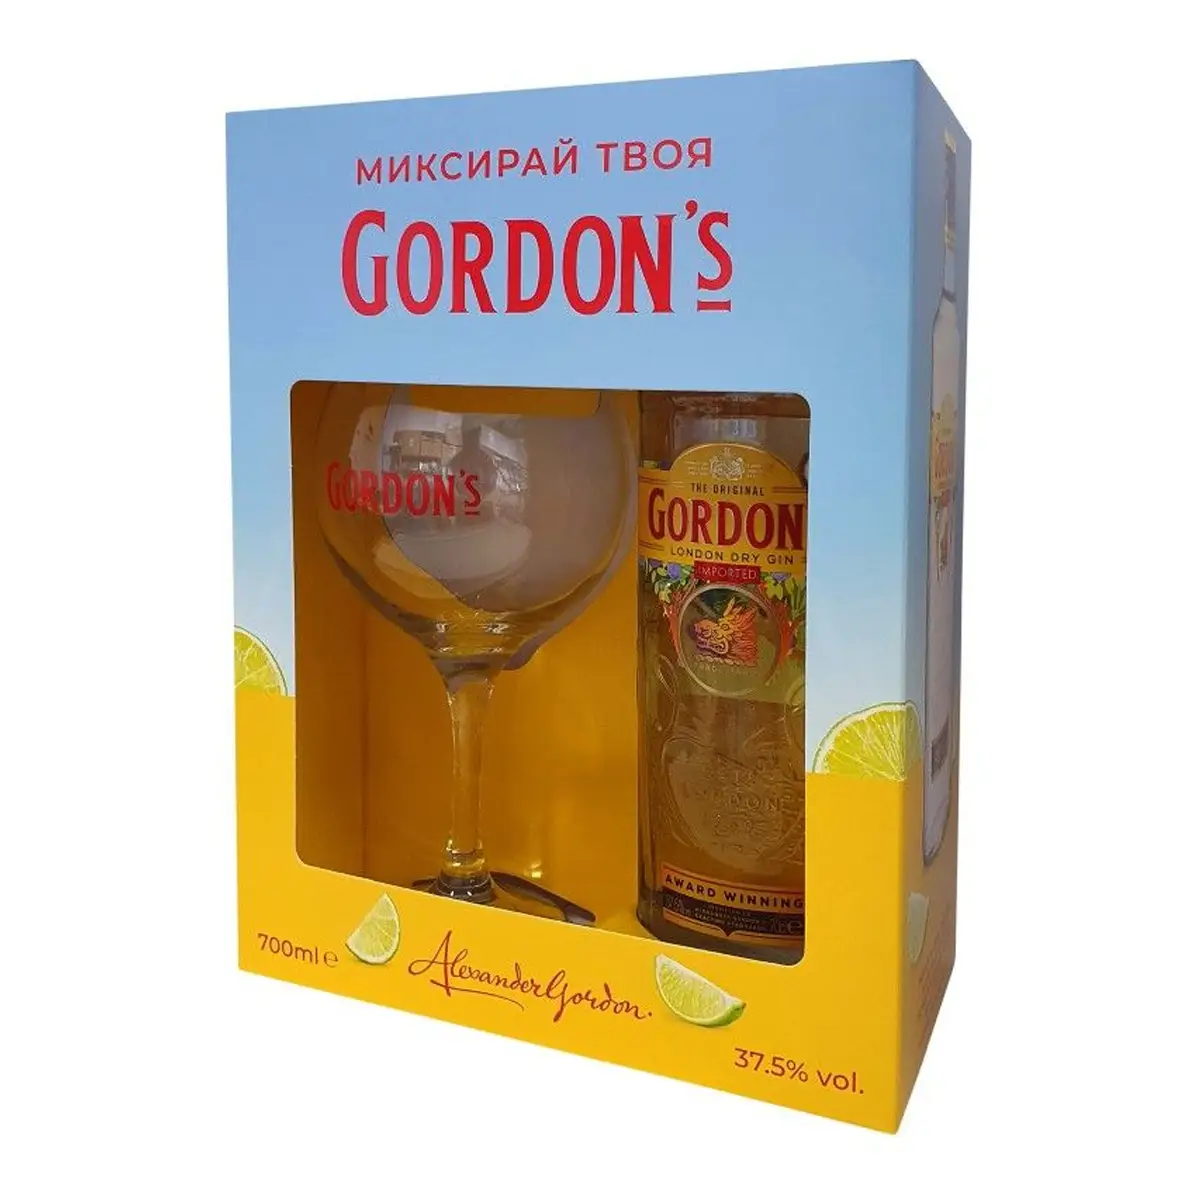 Gordon's London Dry Gin 700ml.-Copy